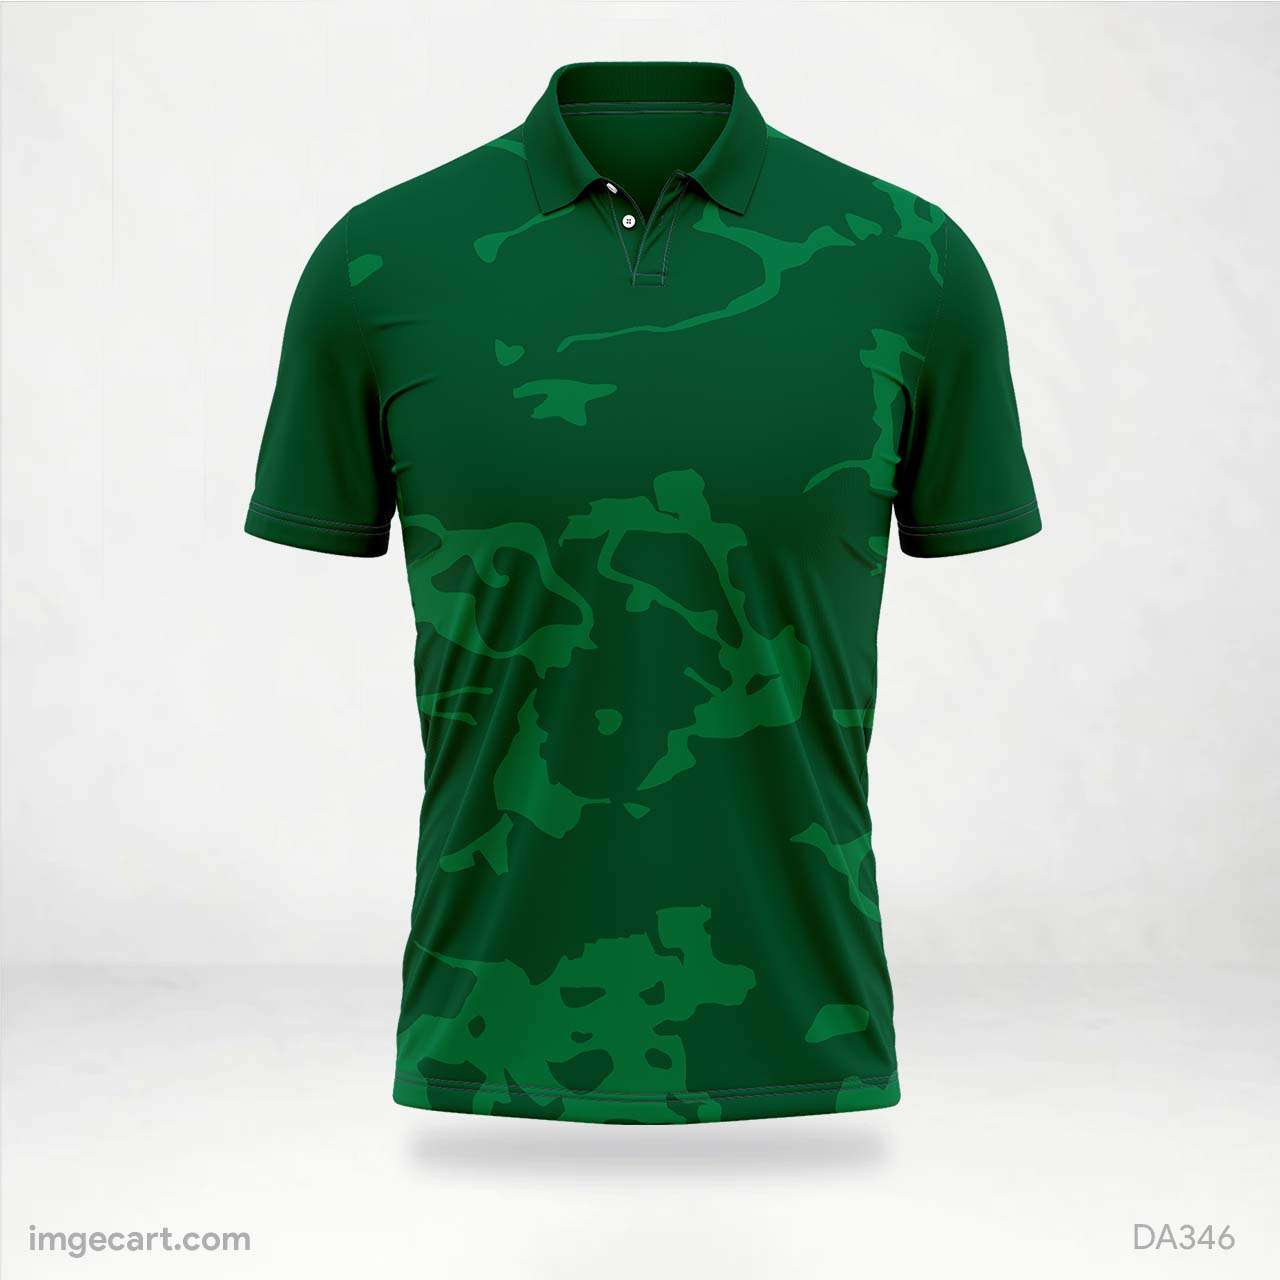 Cricket jersey design Green Sublimation - imgecart